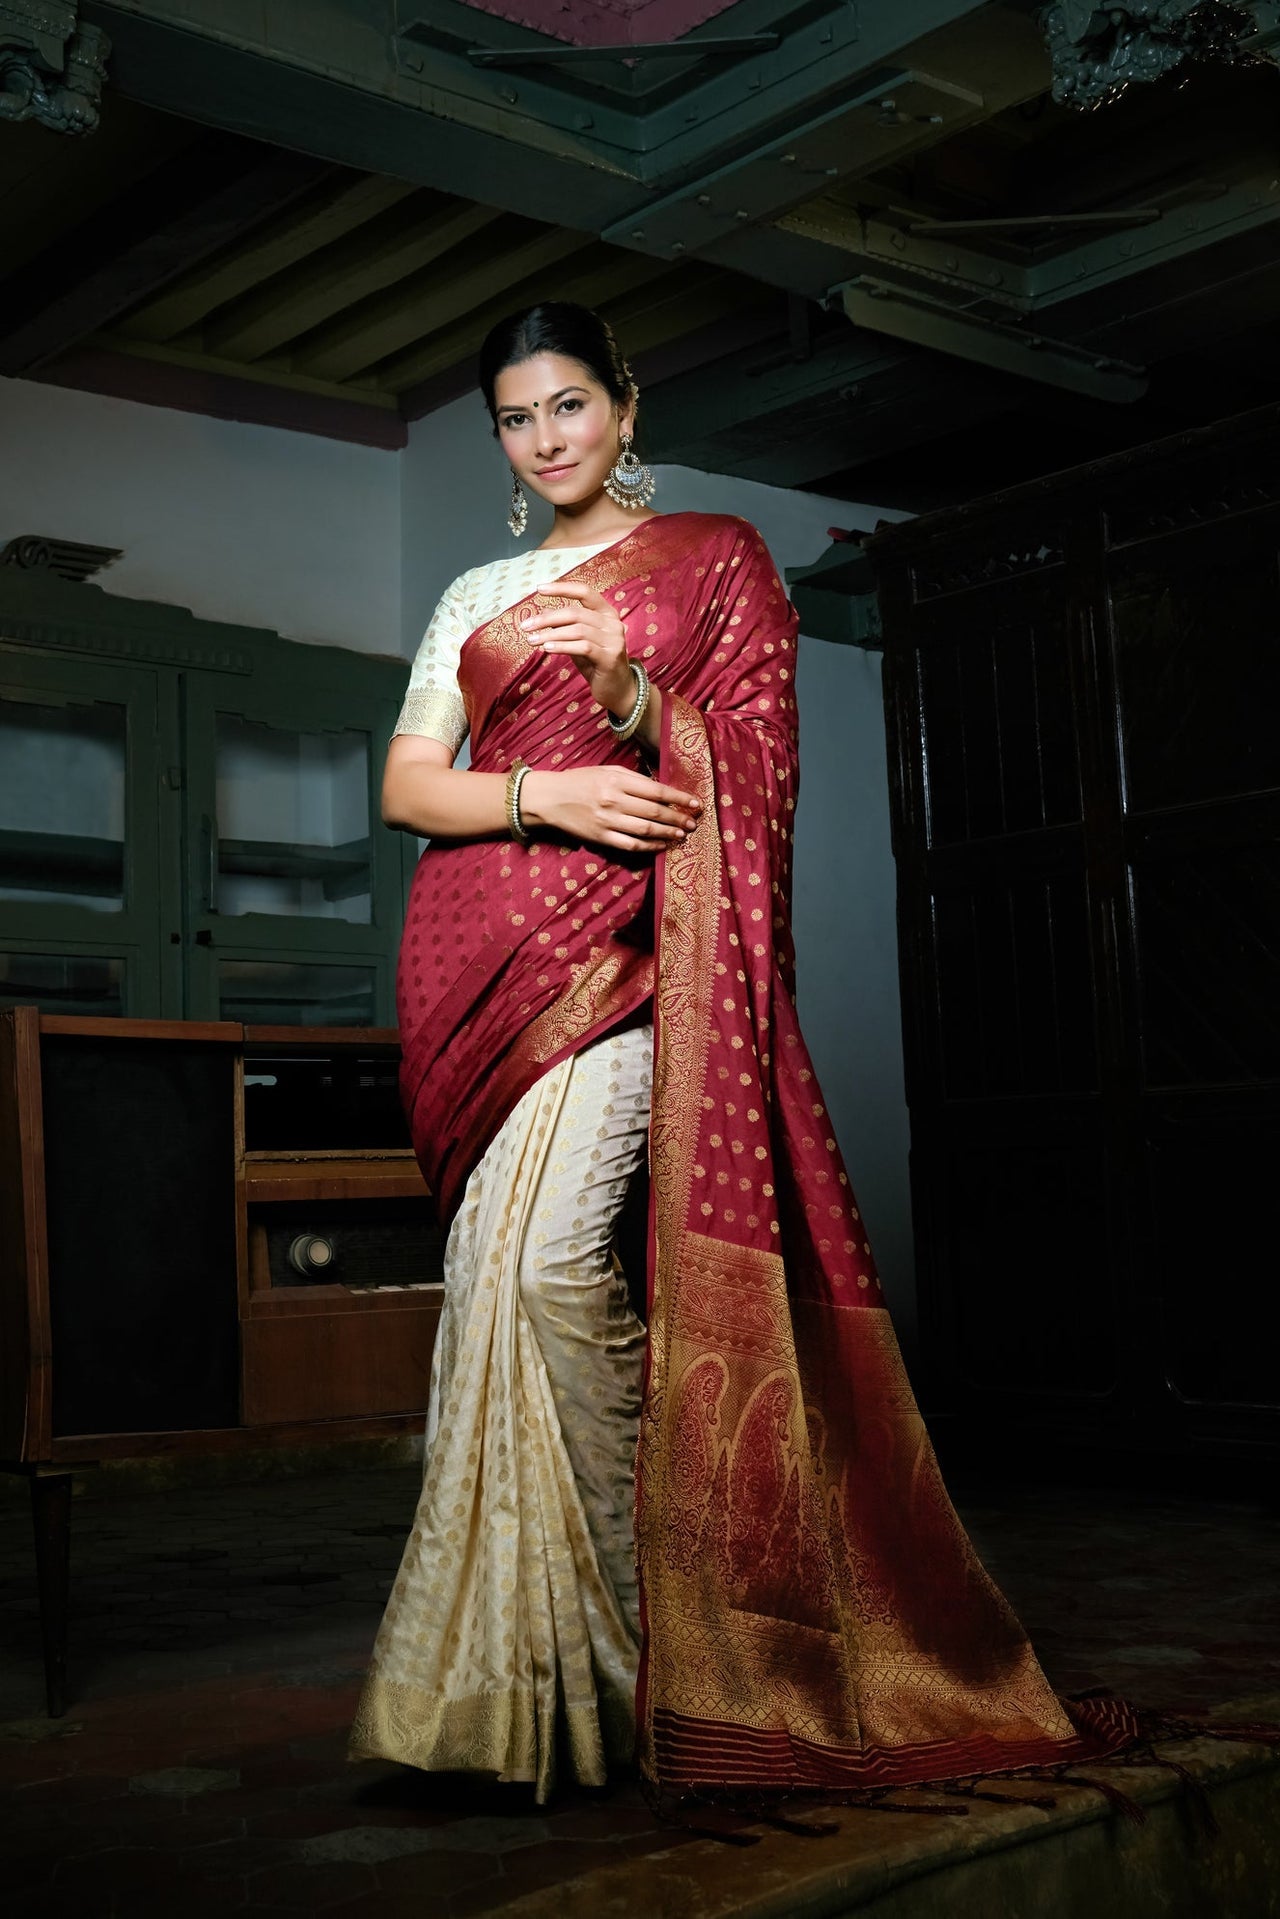 Vardha Maroon Red-Ivory White Golden Zari Banarasi Raw Silk Saree